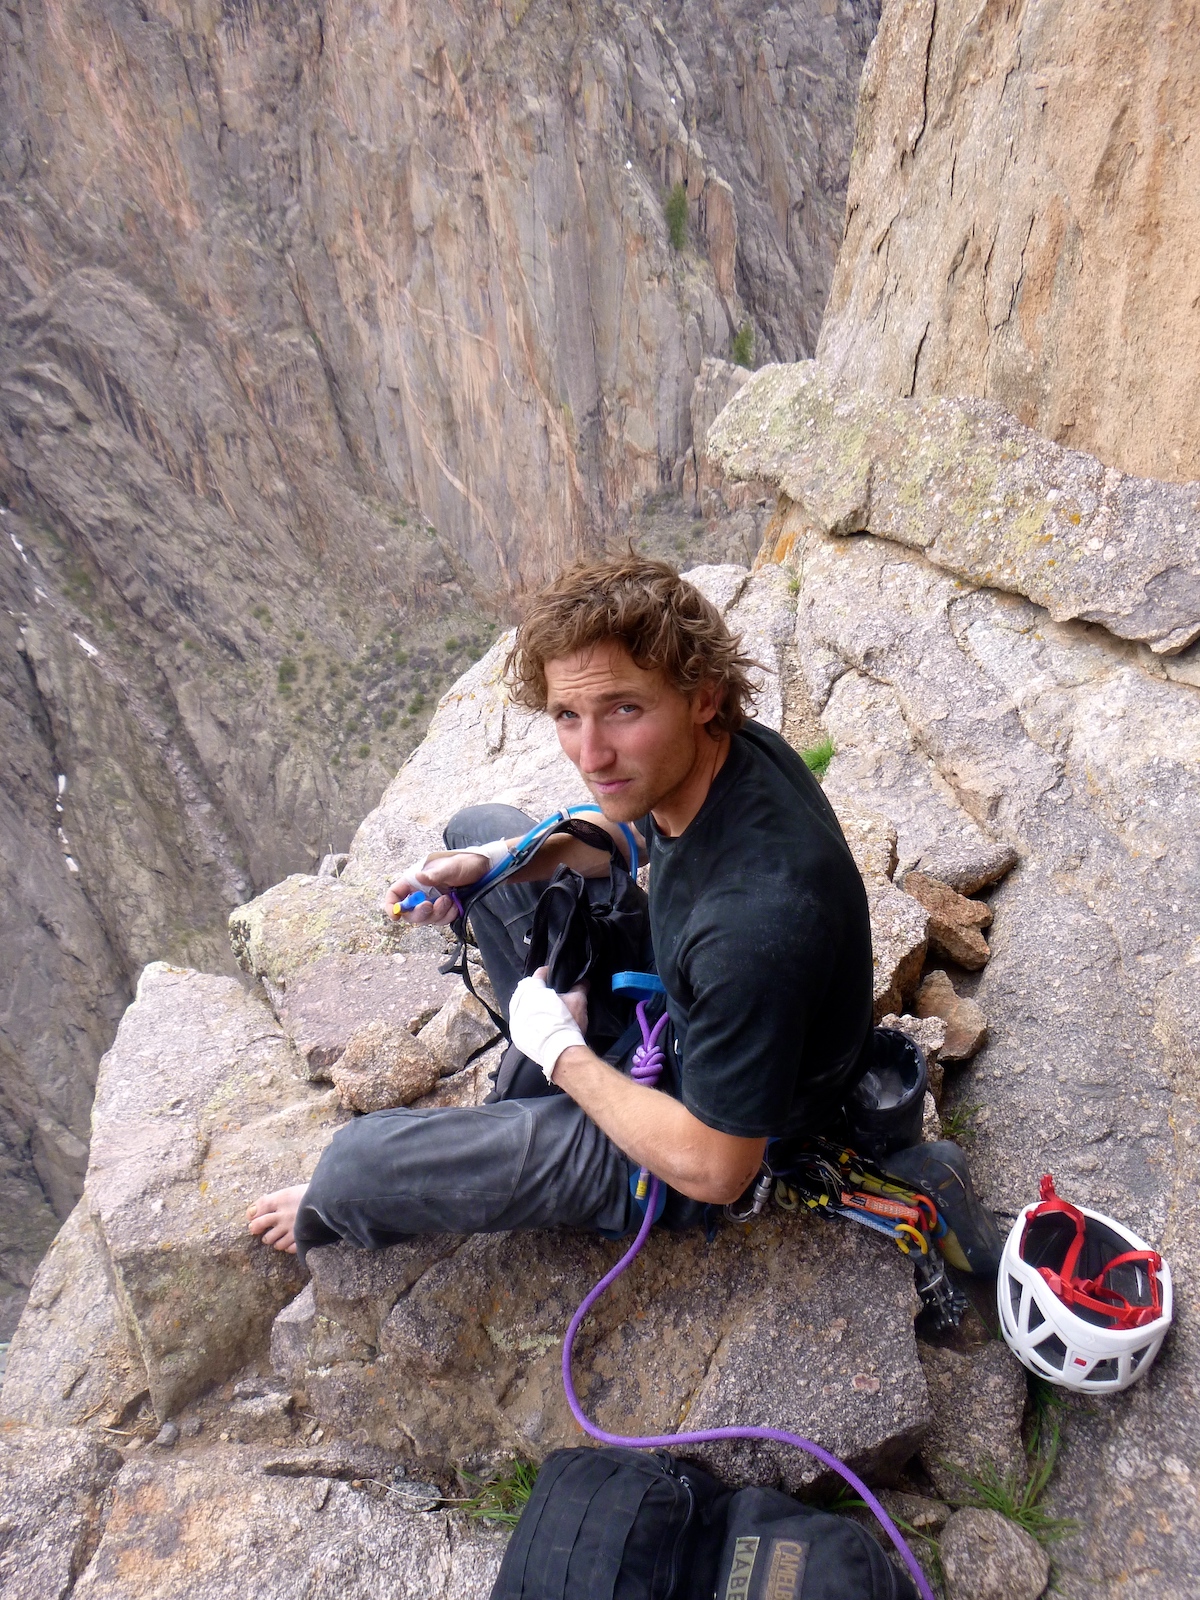 Jack Cody wearing tape gloves in the Black Canyon of the Gunnison, 2014. [Photo] Derek Franz